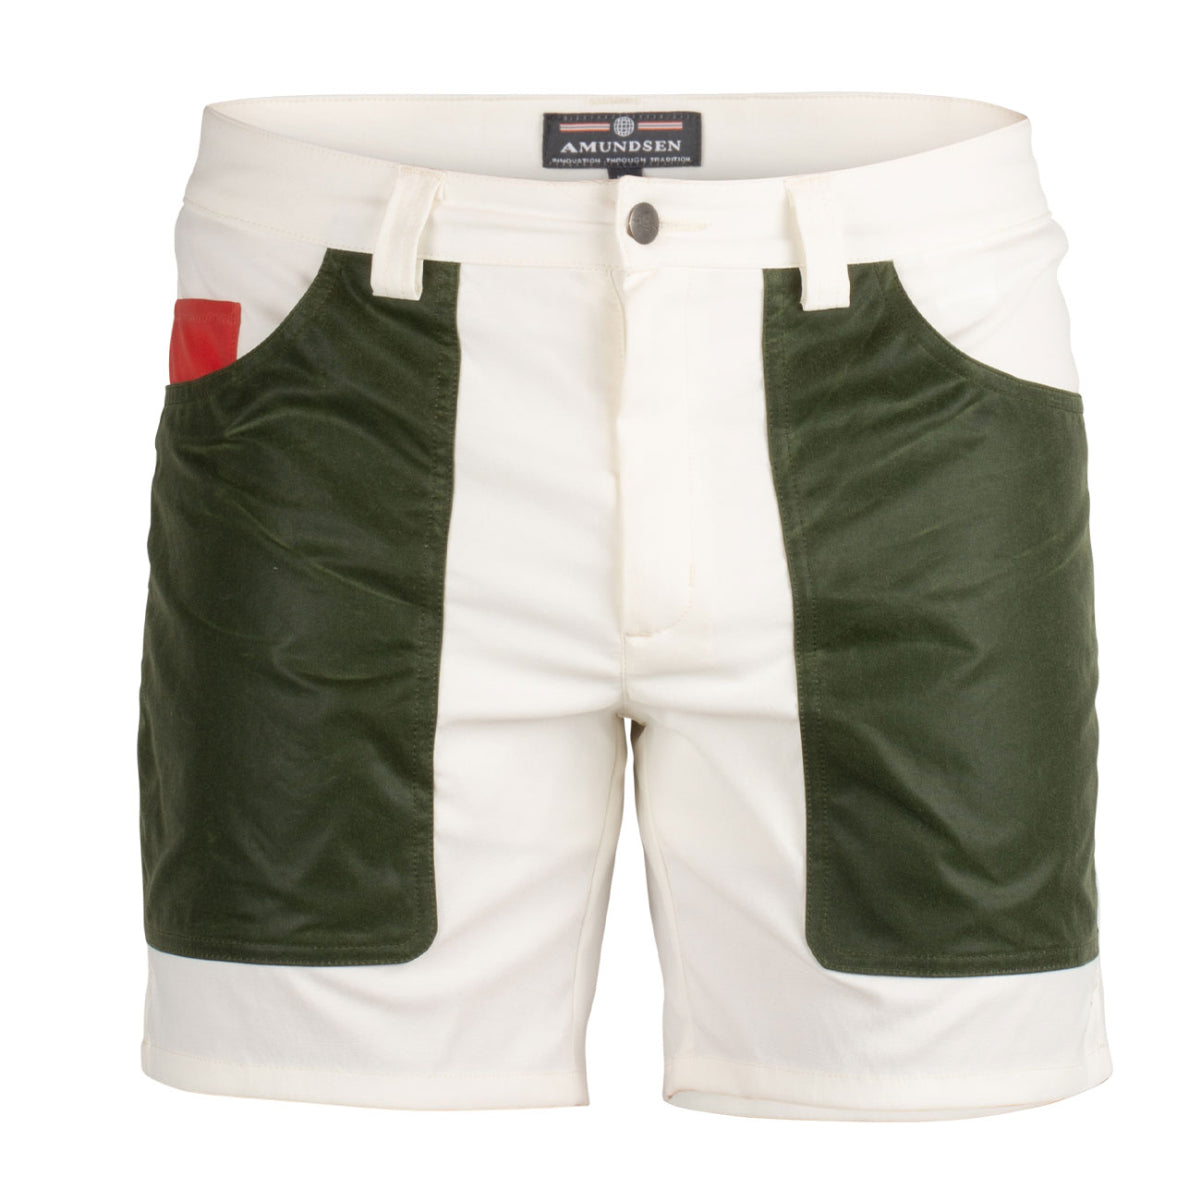 Amundsen Sports - Men's 7 Incher Field Shorts - Offwhite / Green